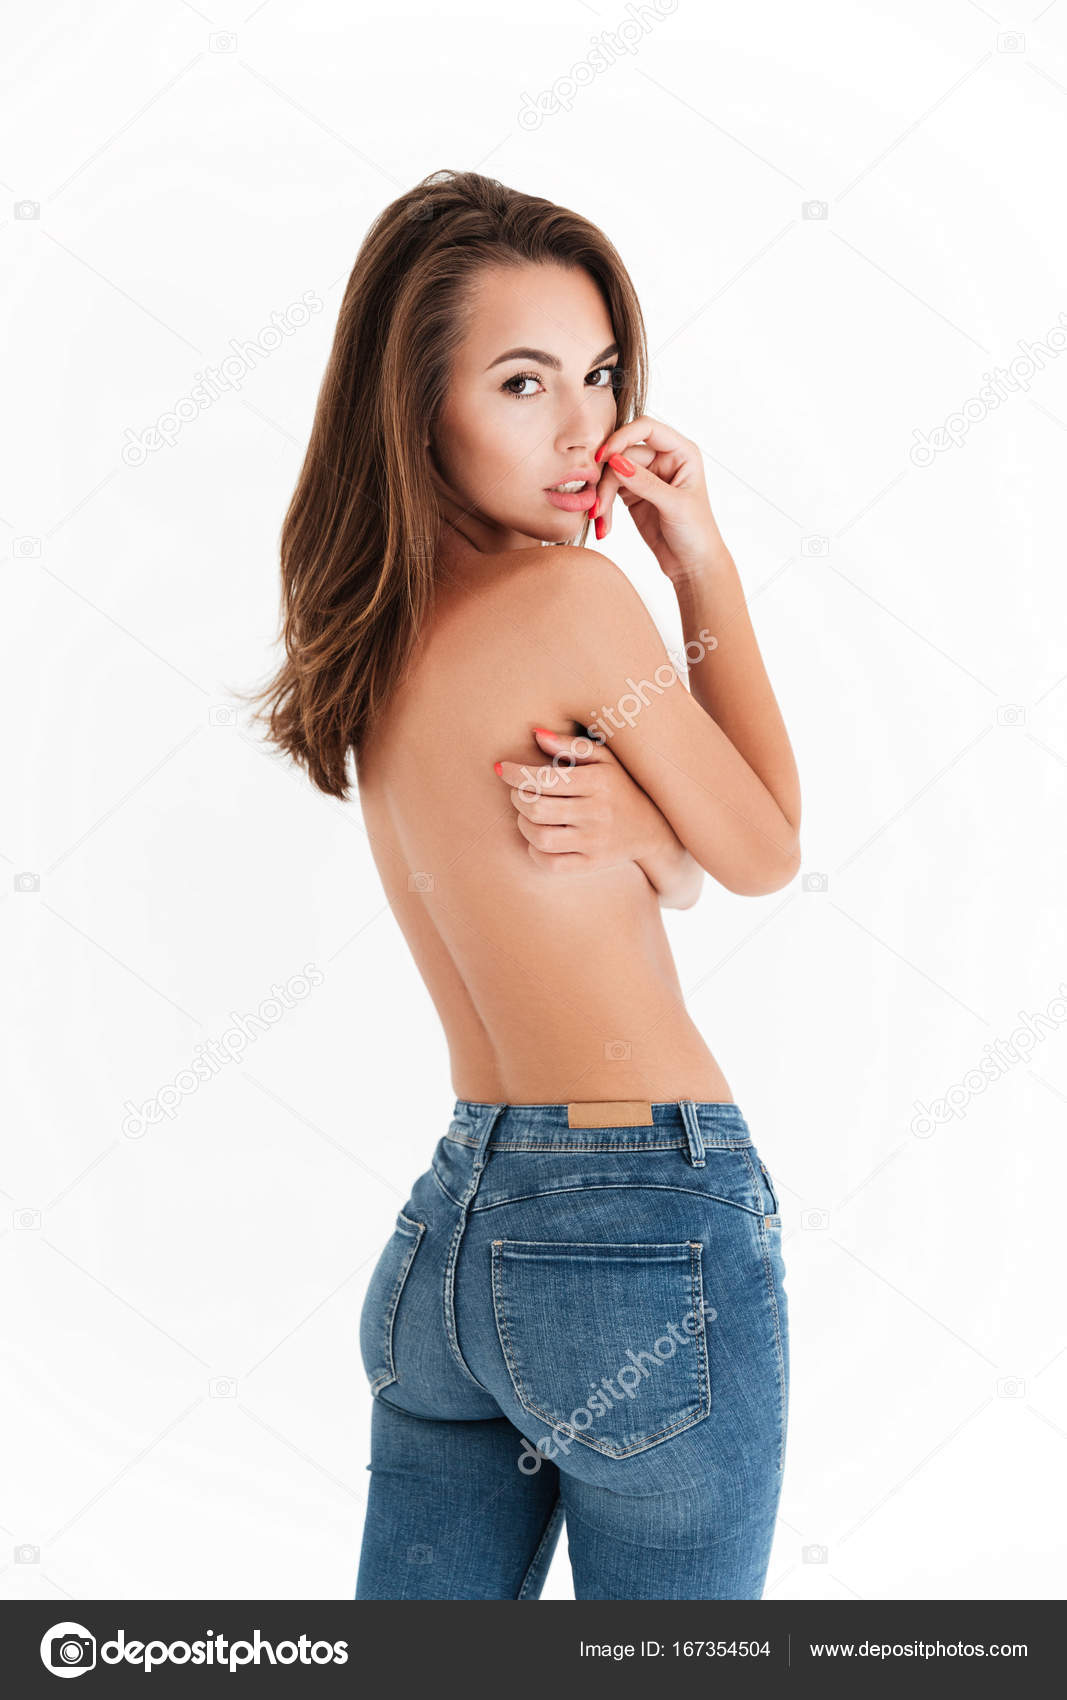 Super skinny women standing porn pics - Nude gallery